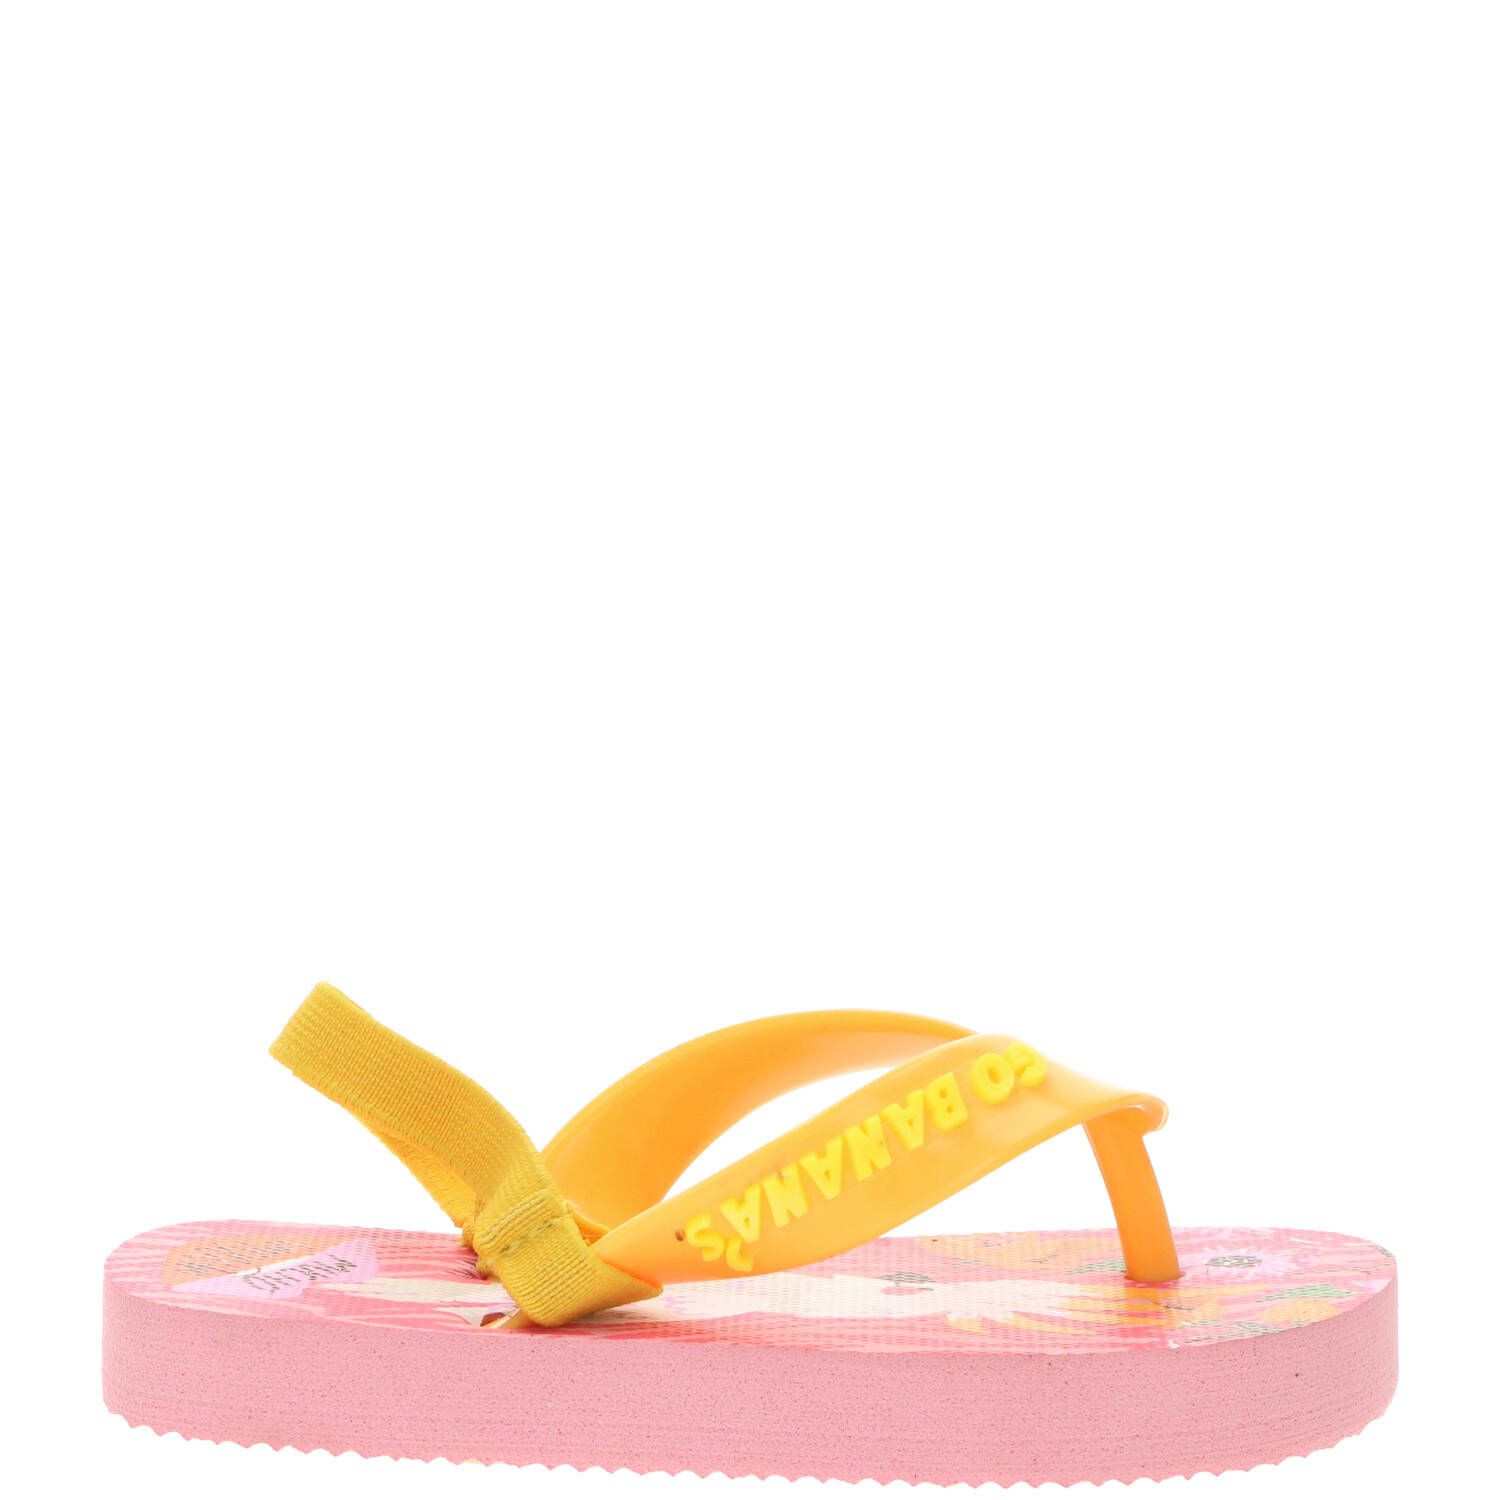 Go Banana's kakatoe slipper, Slippers, Meisje, Maat 22, roze/multi